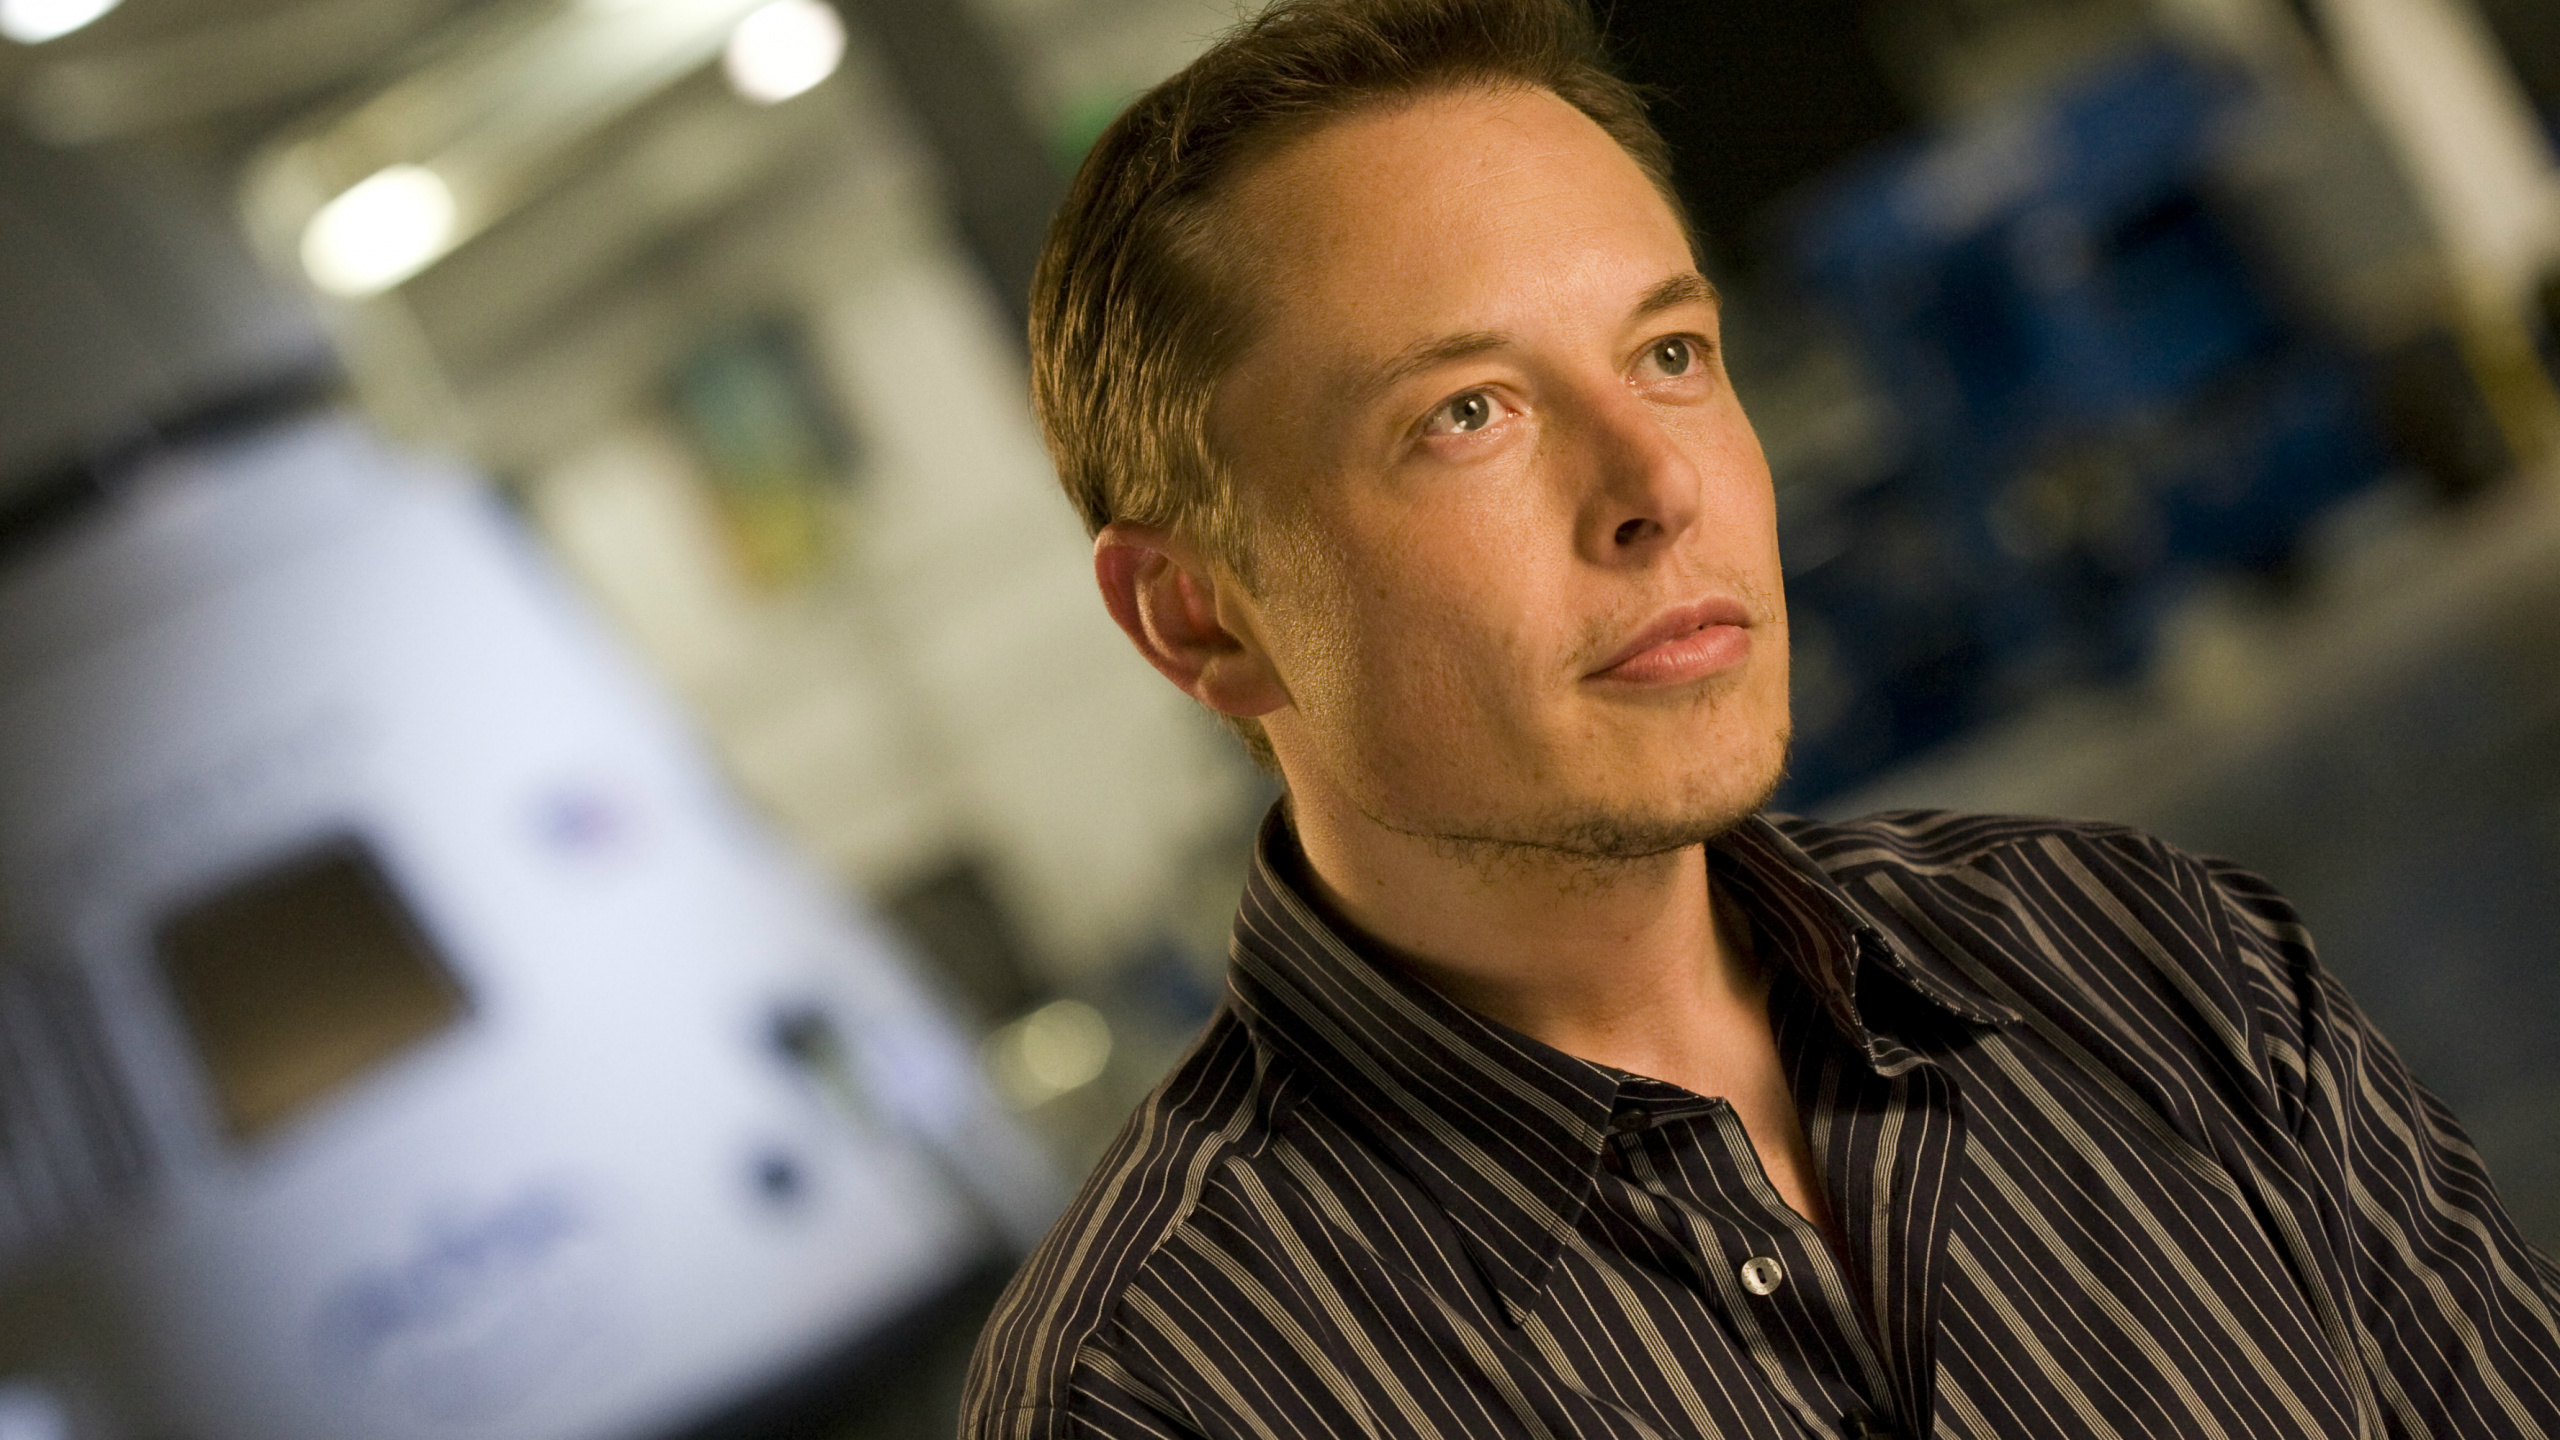 Elon Musk, SpaceX, Hyperloop, White Collar Worker, Facial Hair. Wallpaper in 2560x1440 Resolution